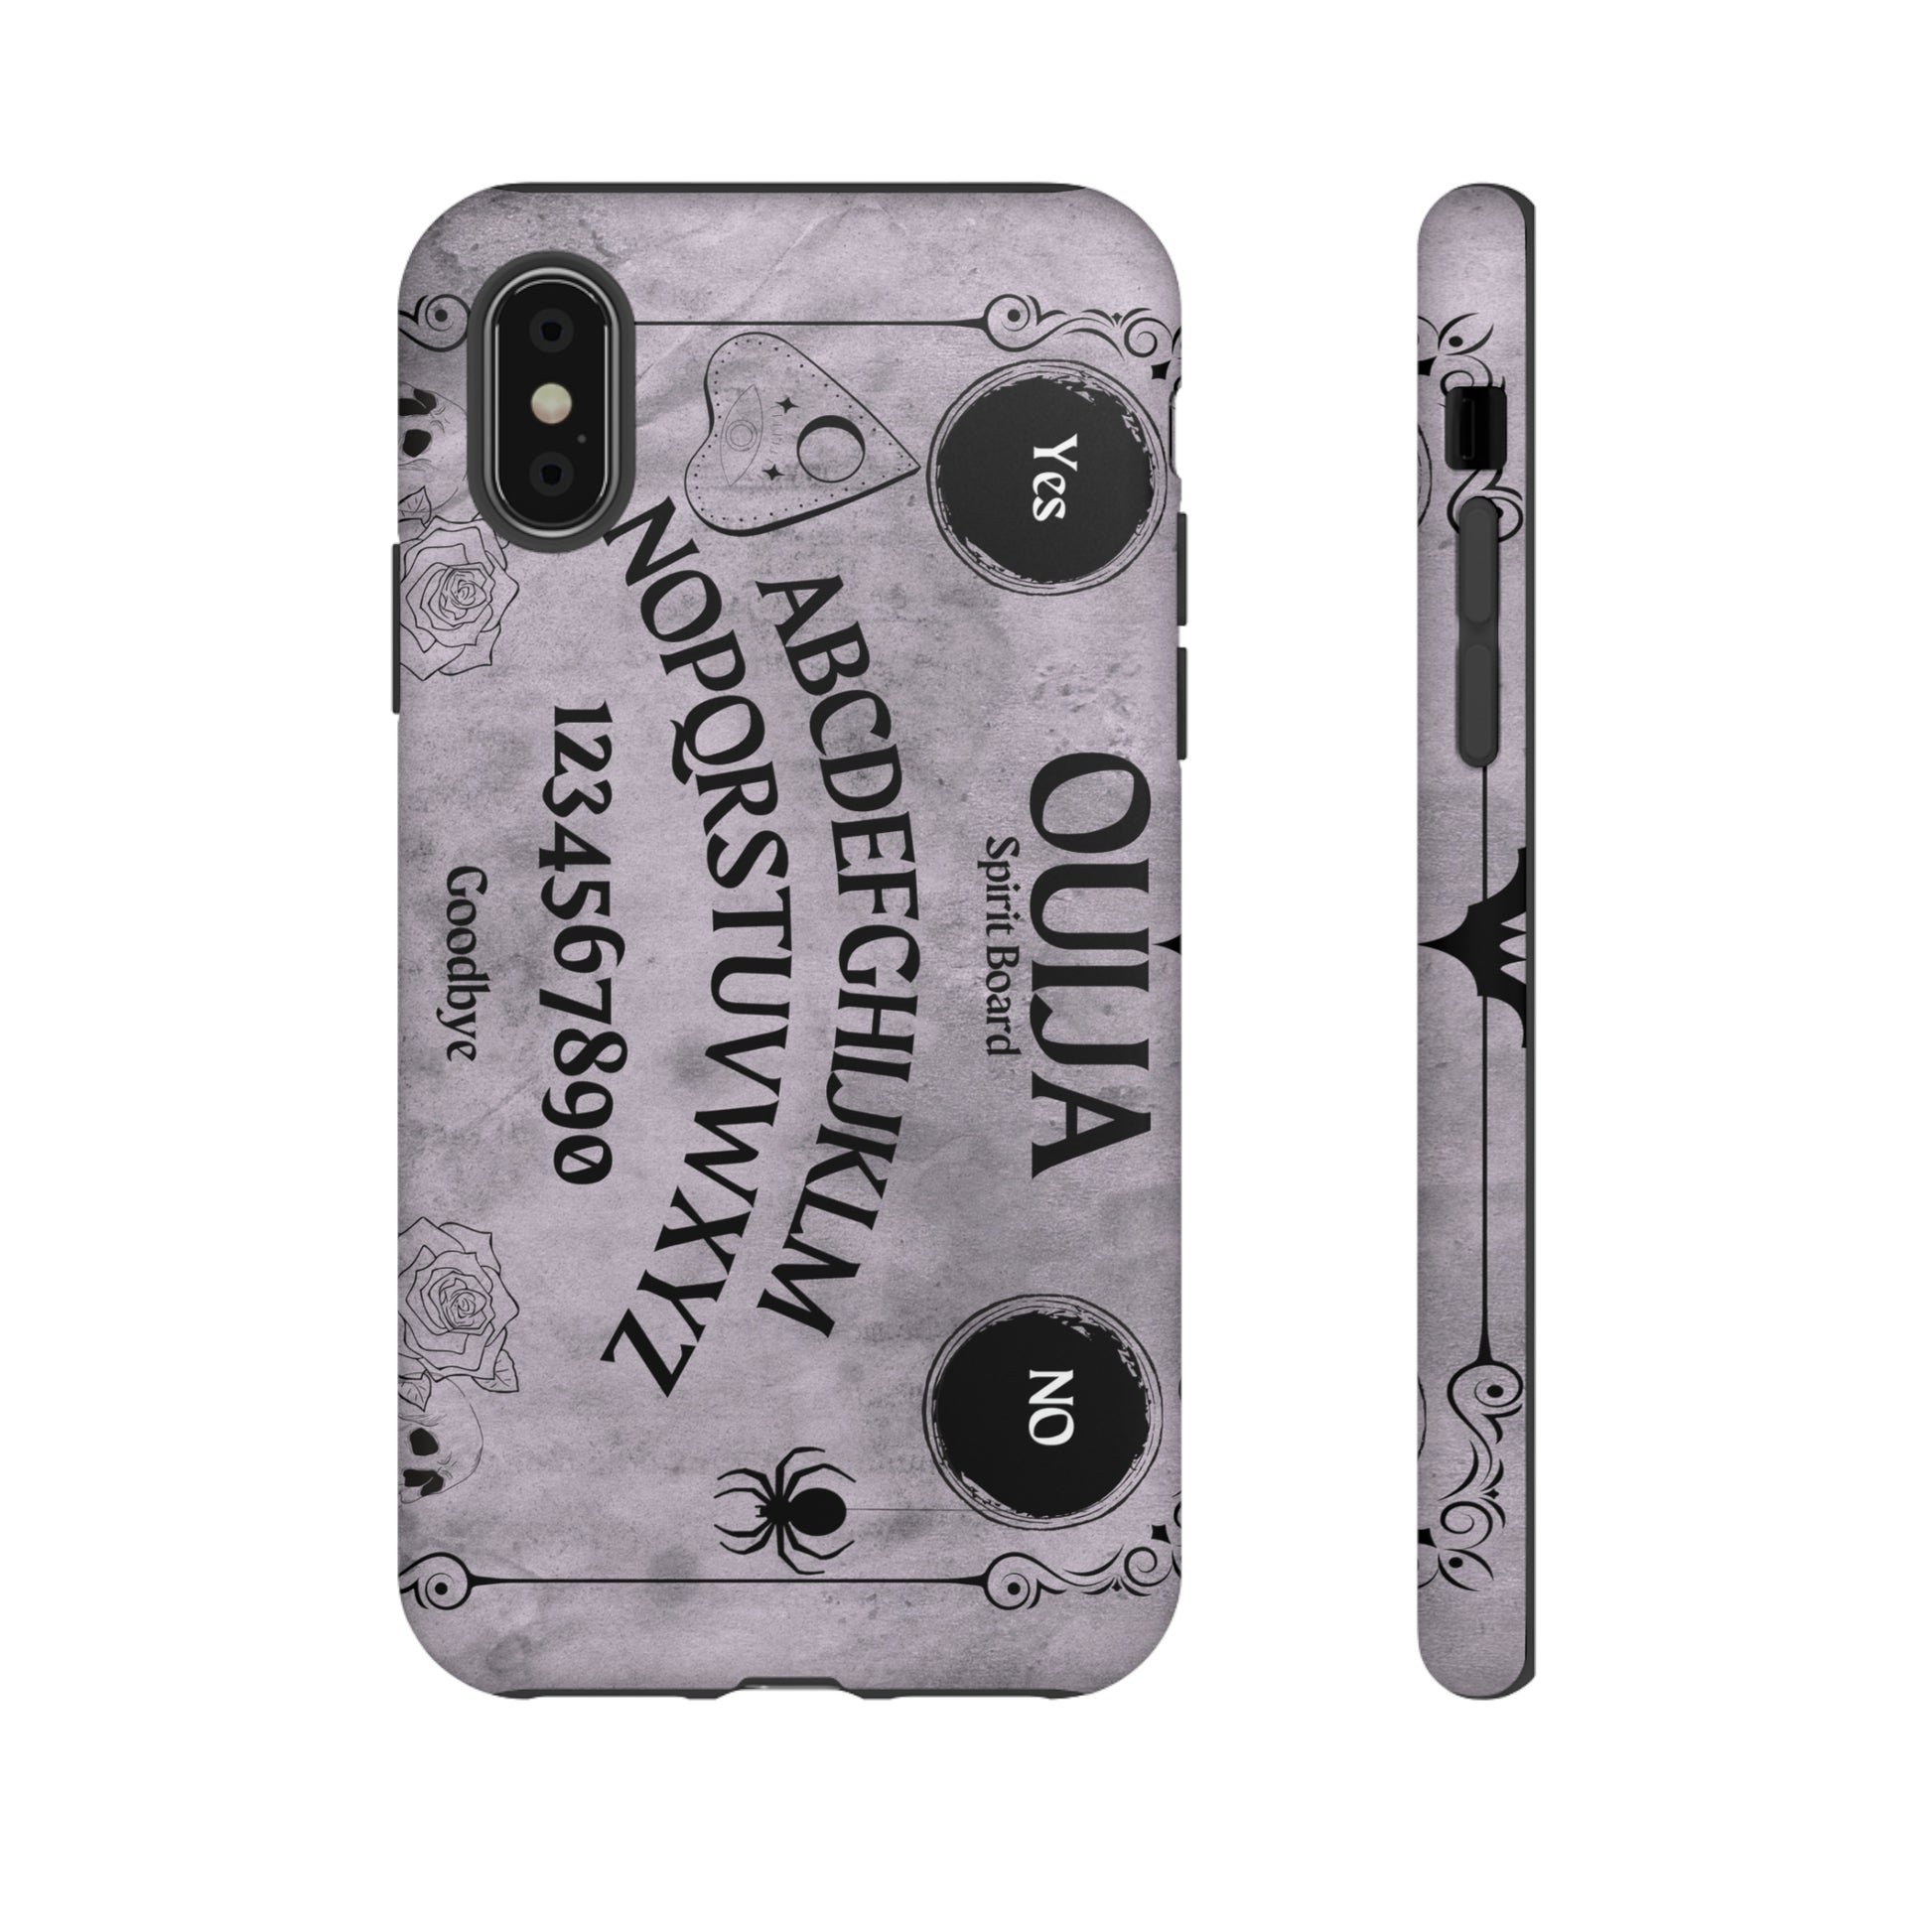 Ouija Board Tough Phone Cases For Samsung iPhone GooglePhone CaseVTZdesignsiPhone XMatteAccessoriesGlossyhalloween